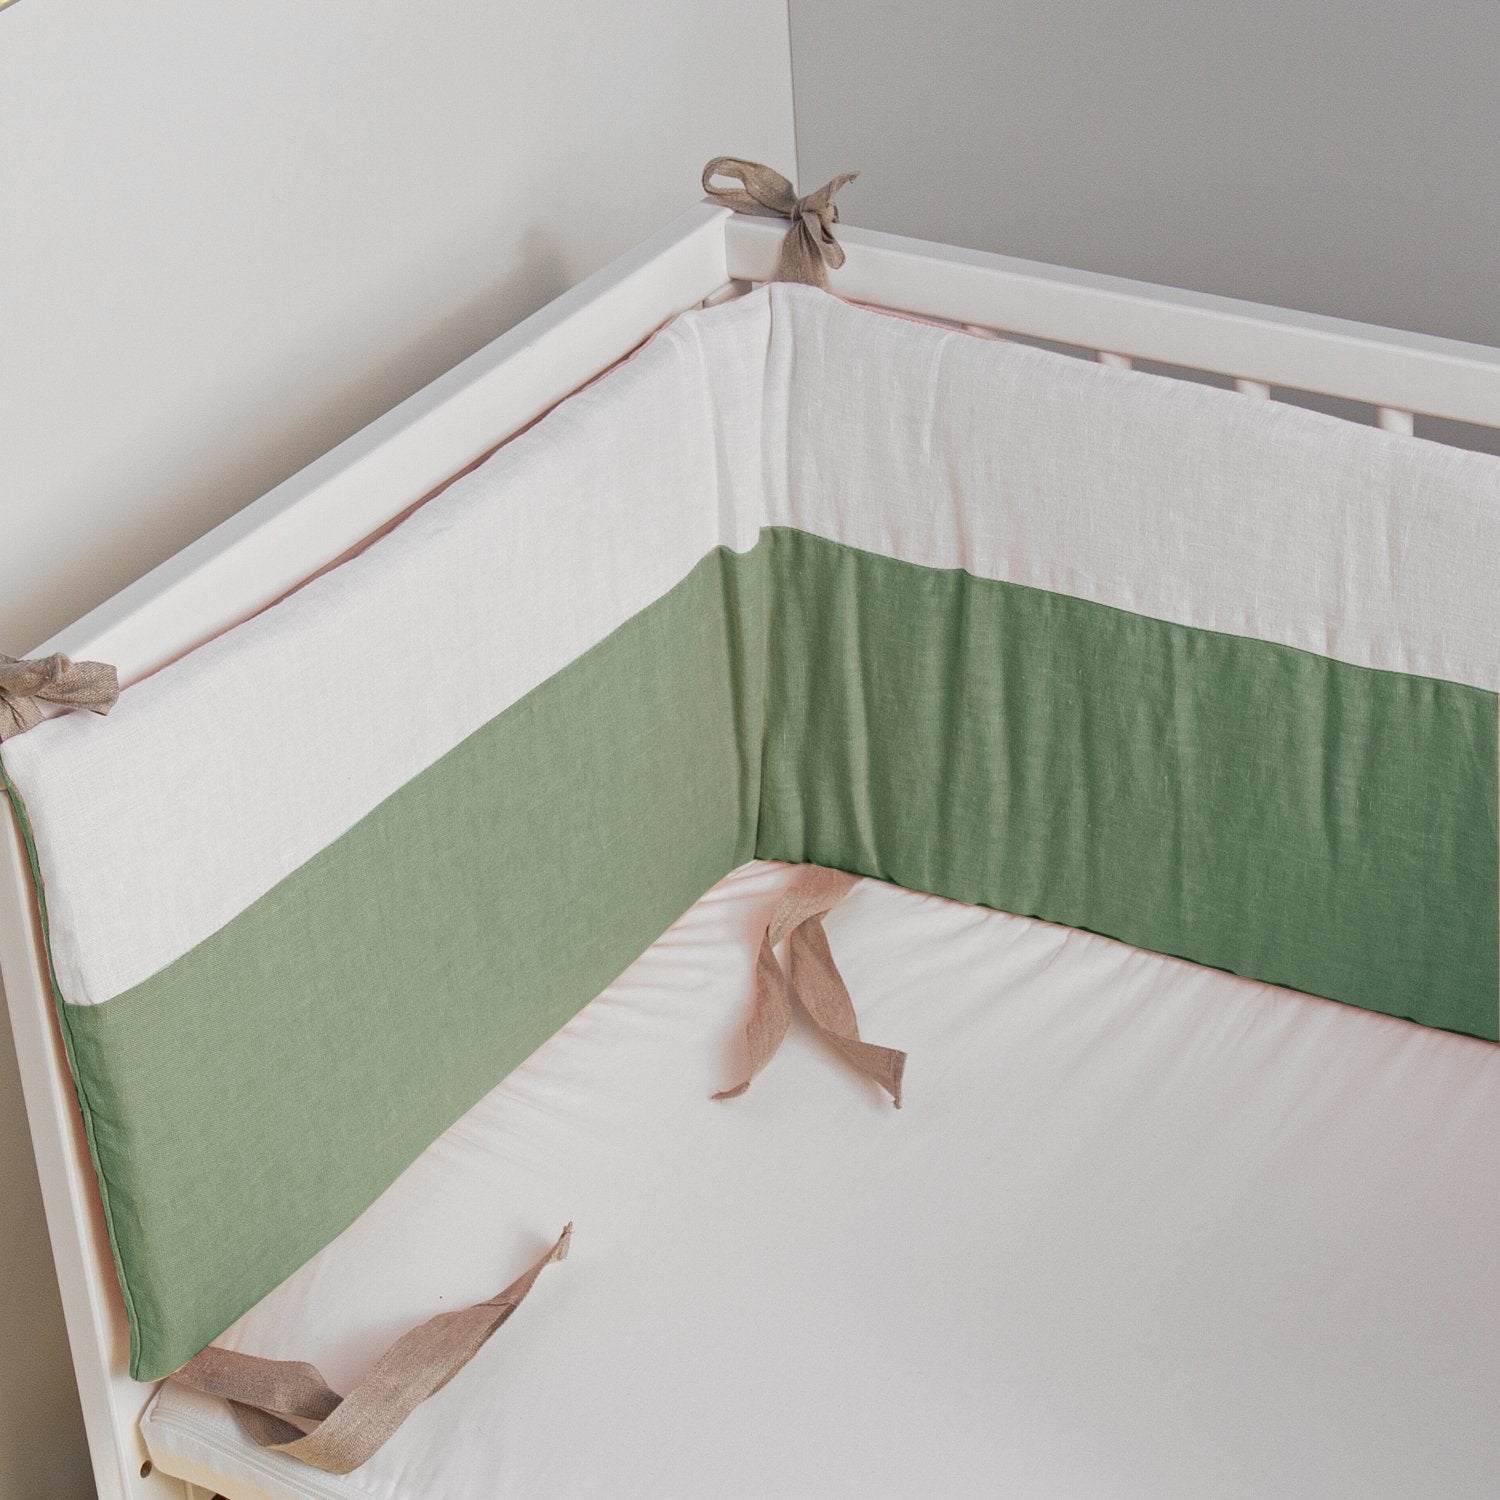 Mini crib protector MAFALDA green